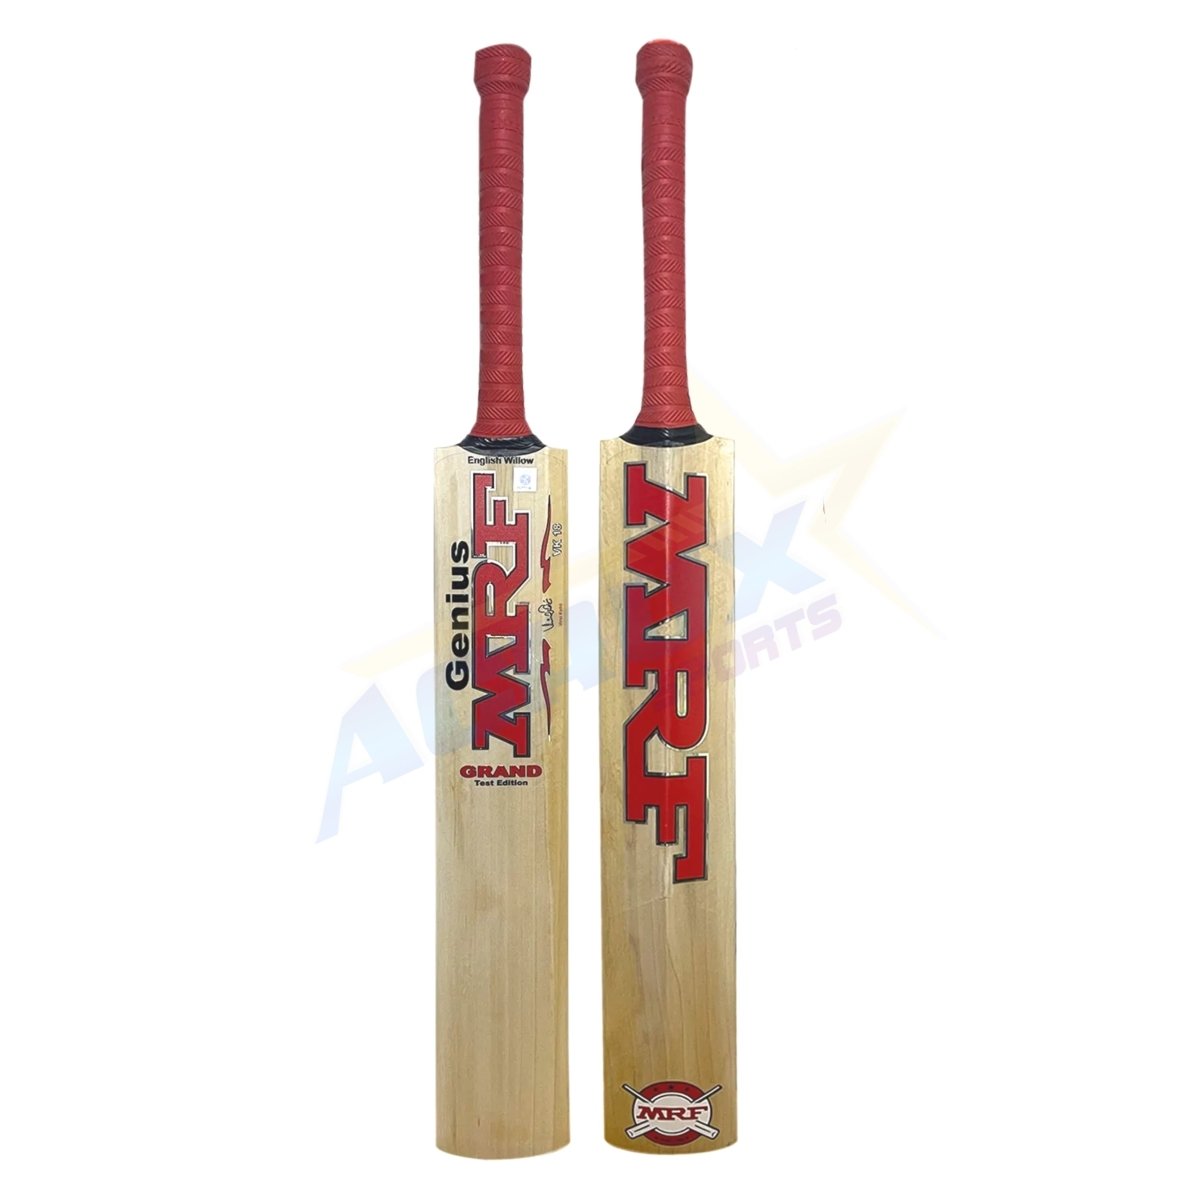 MRF Genius Grand Test Edition English Willow Cricket Bat - Acrux Sports